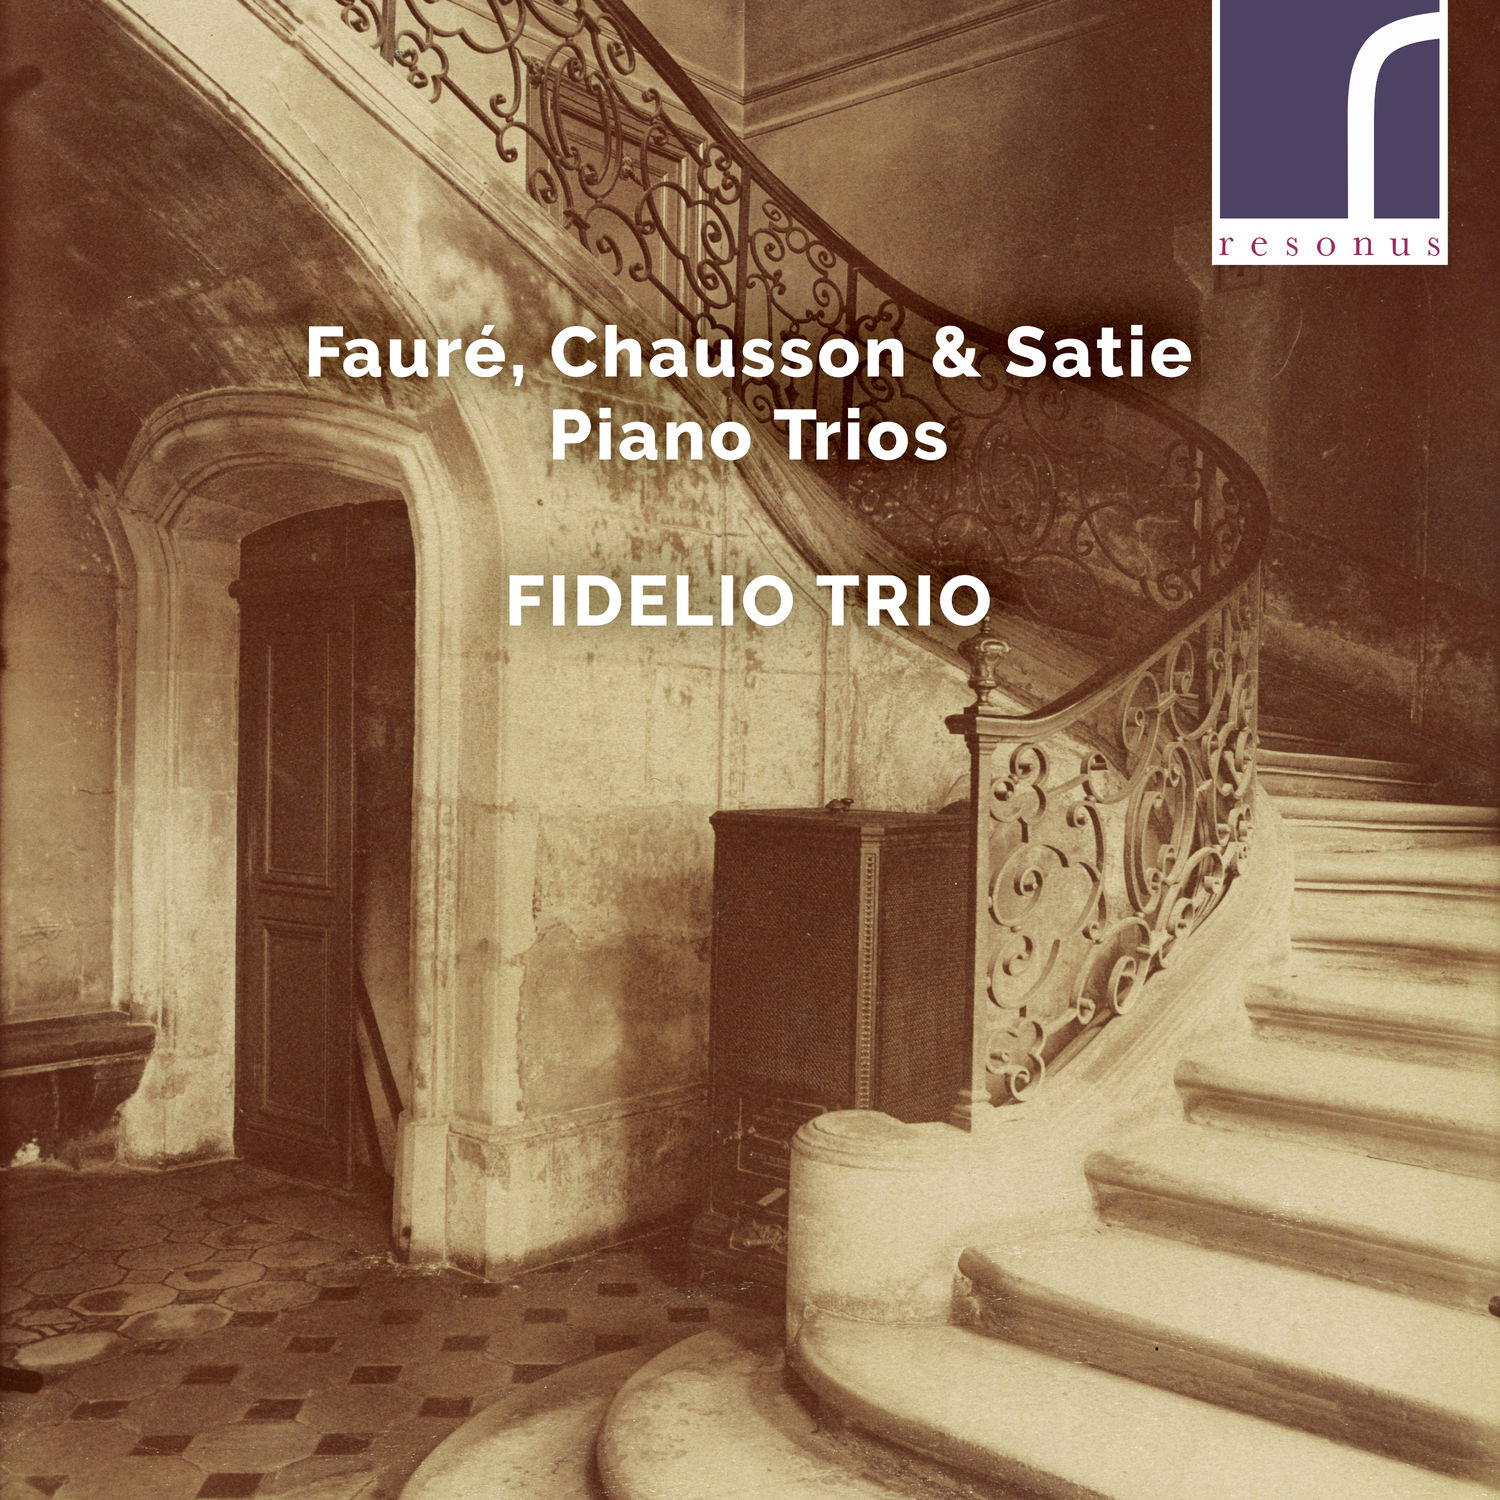 Fidelio Trio – Faure, Chausson & Satie: Piano Trios (2018) [FLAC 24bit/96kHz]